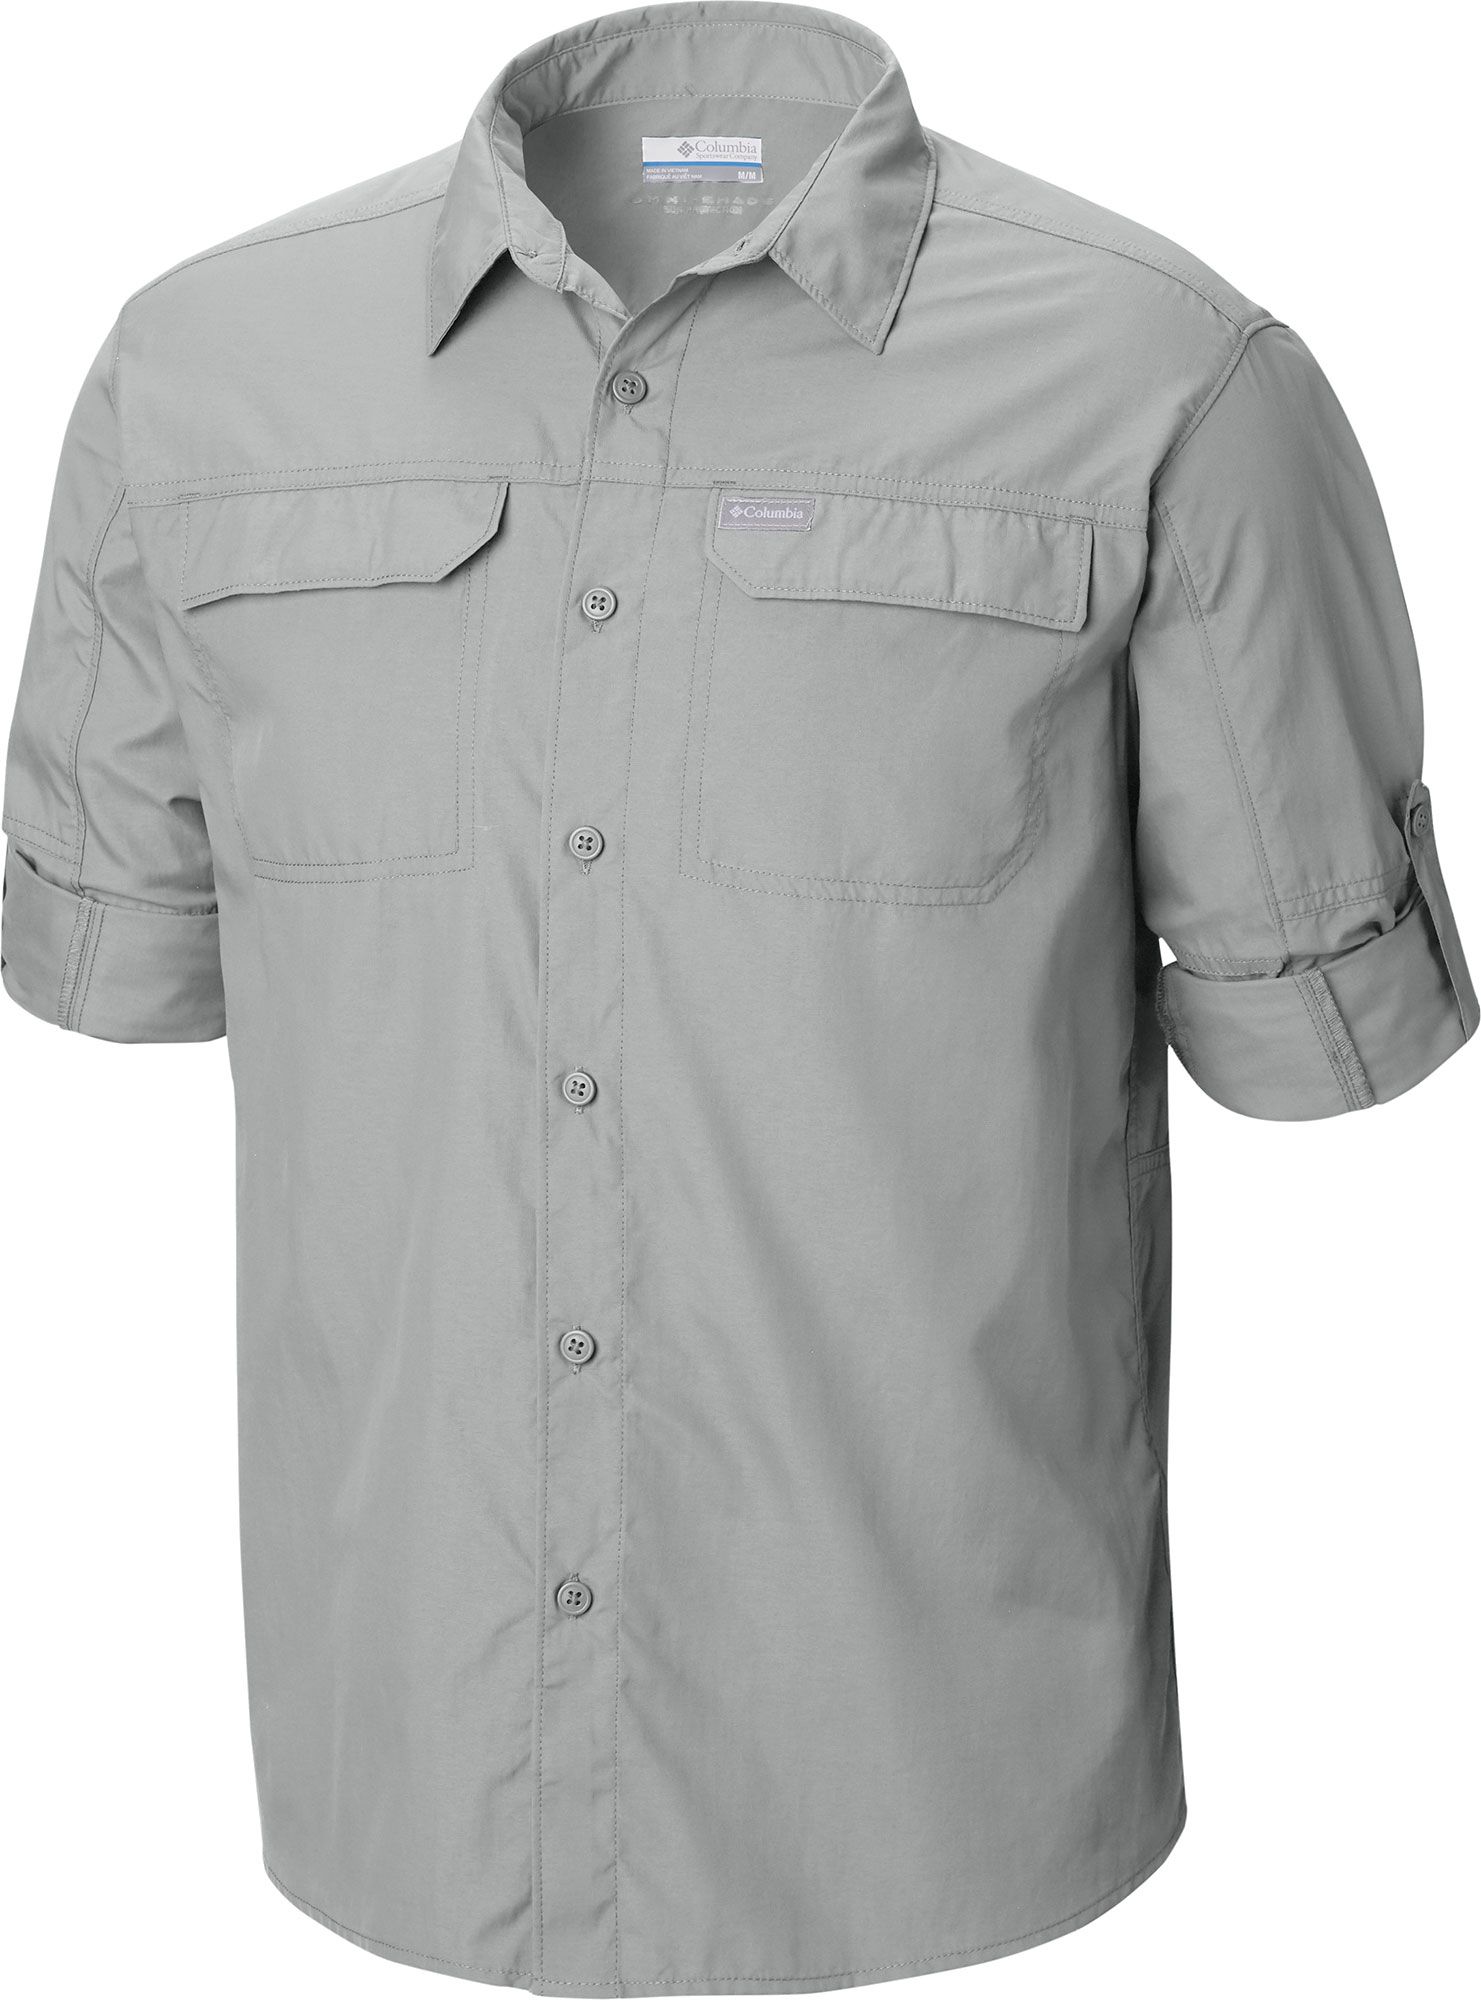 columbia silver ridge long sleeve shirt mens